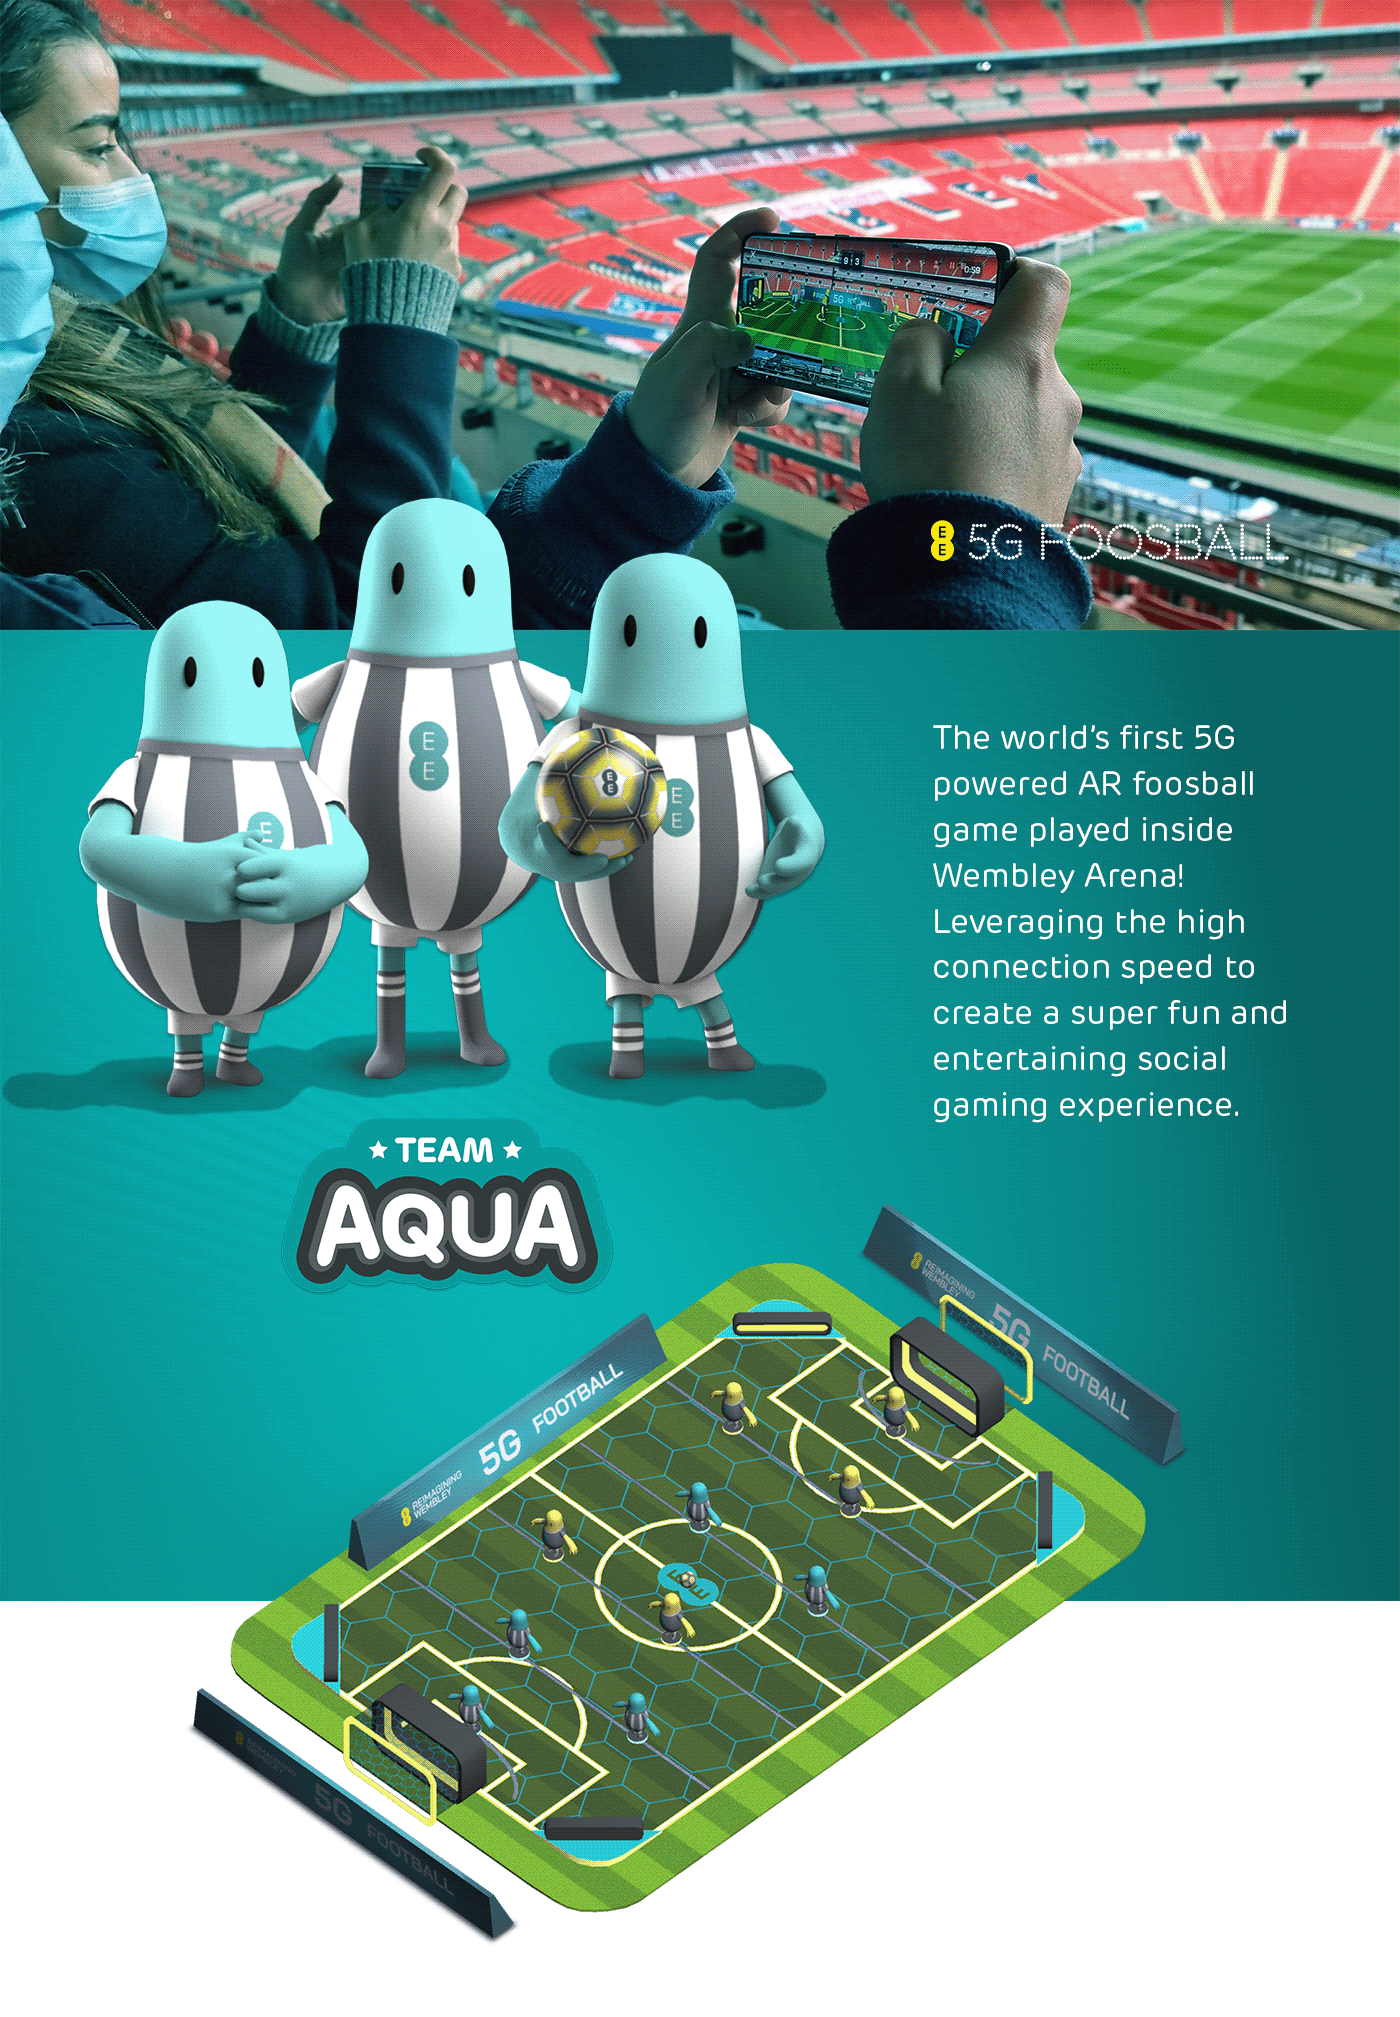 5g AR ar game Character design  ee football game design  Wembley